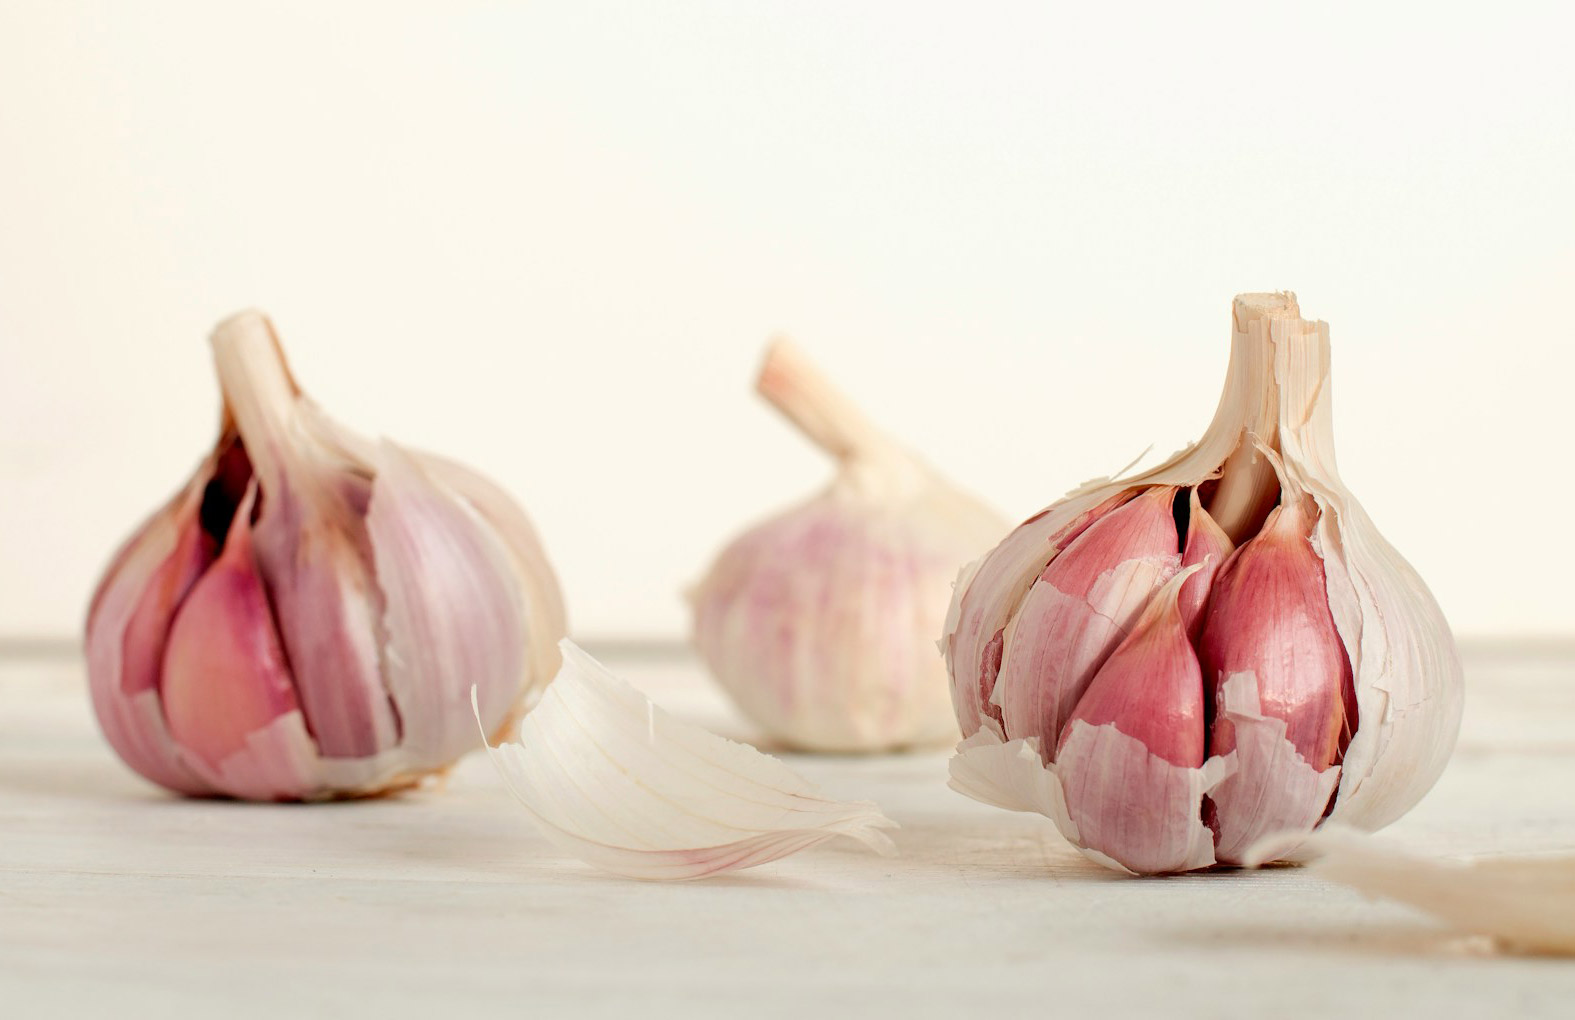 Three garlics on table